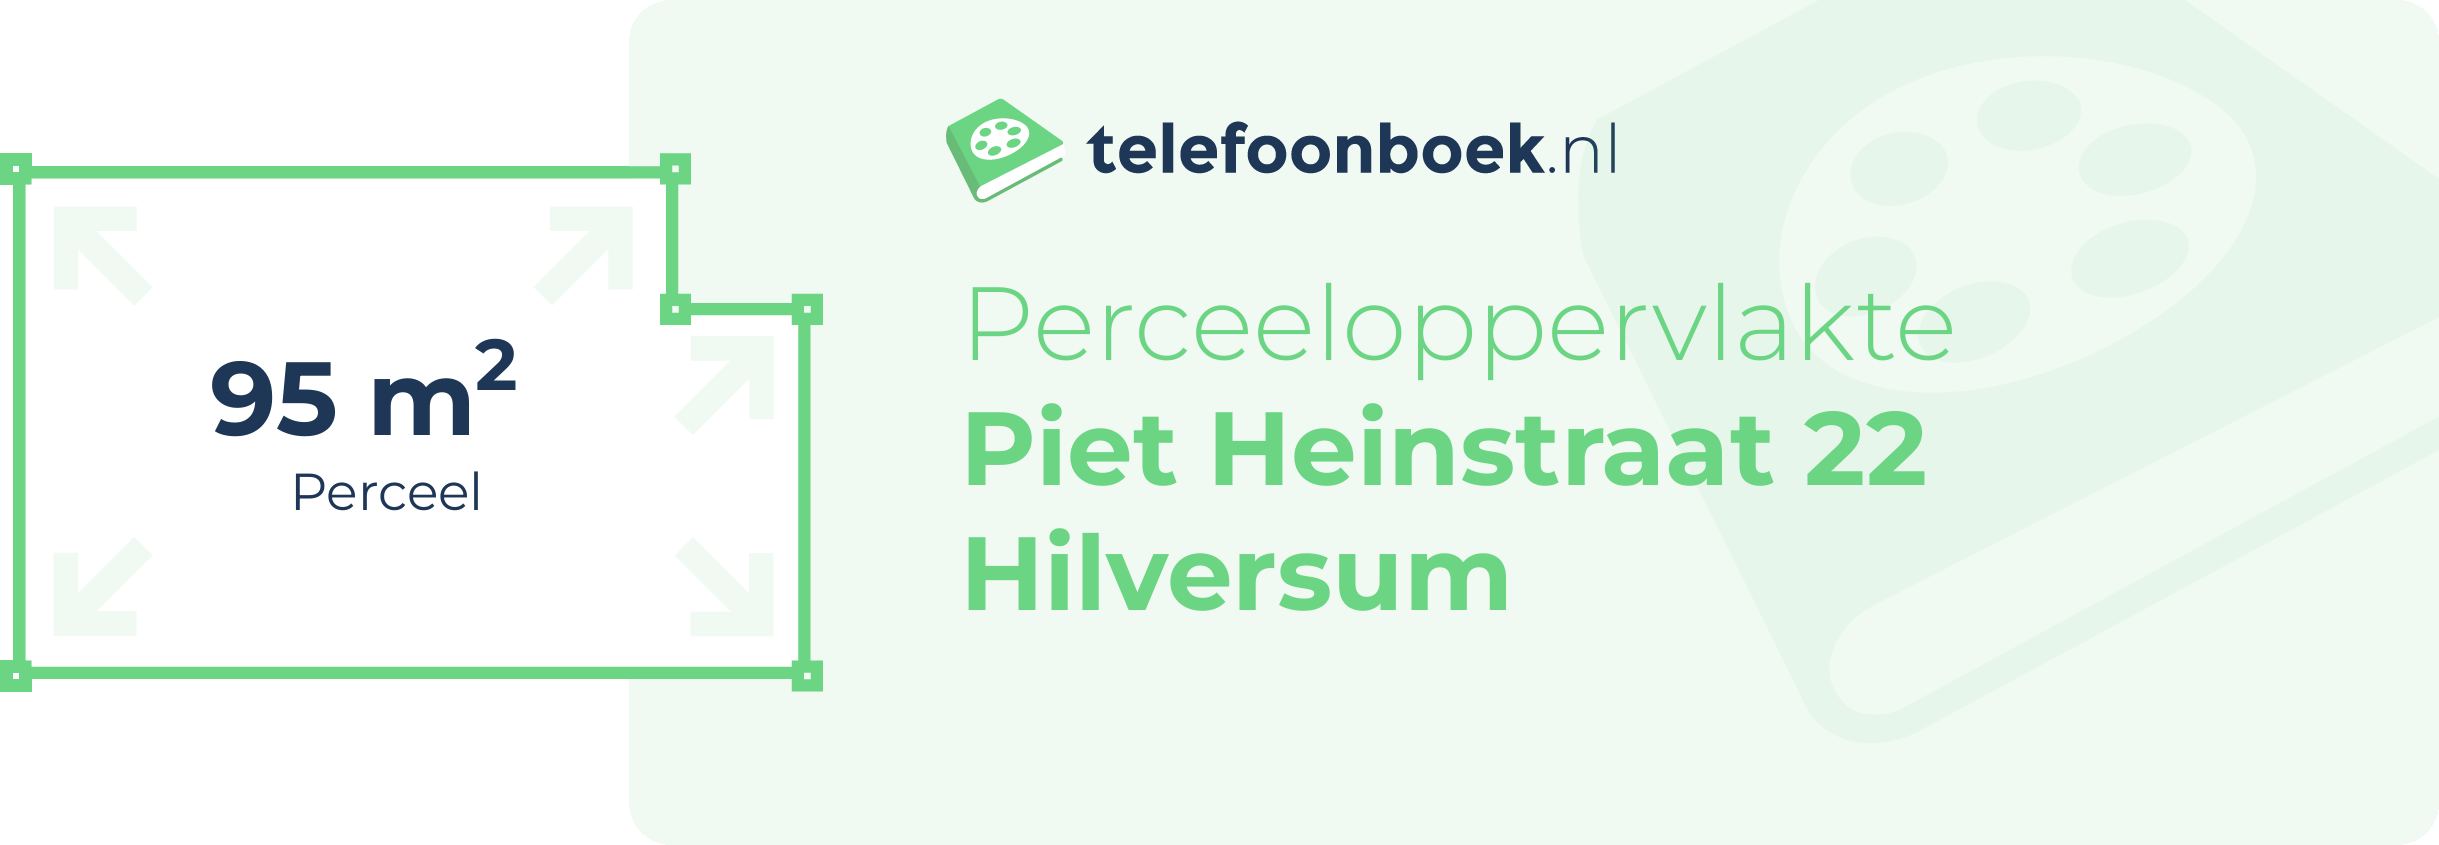 Perceeloppervlakte Piet Heinstraat 22 Hilversum